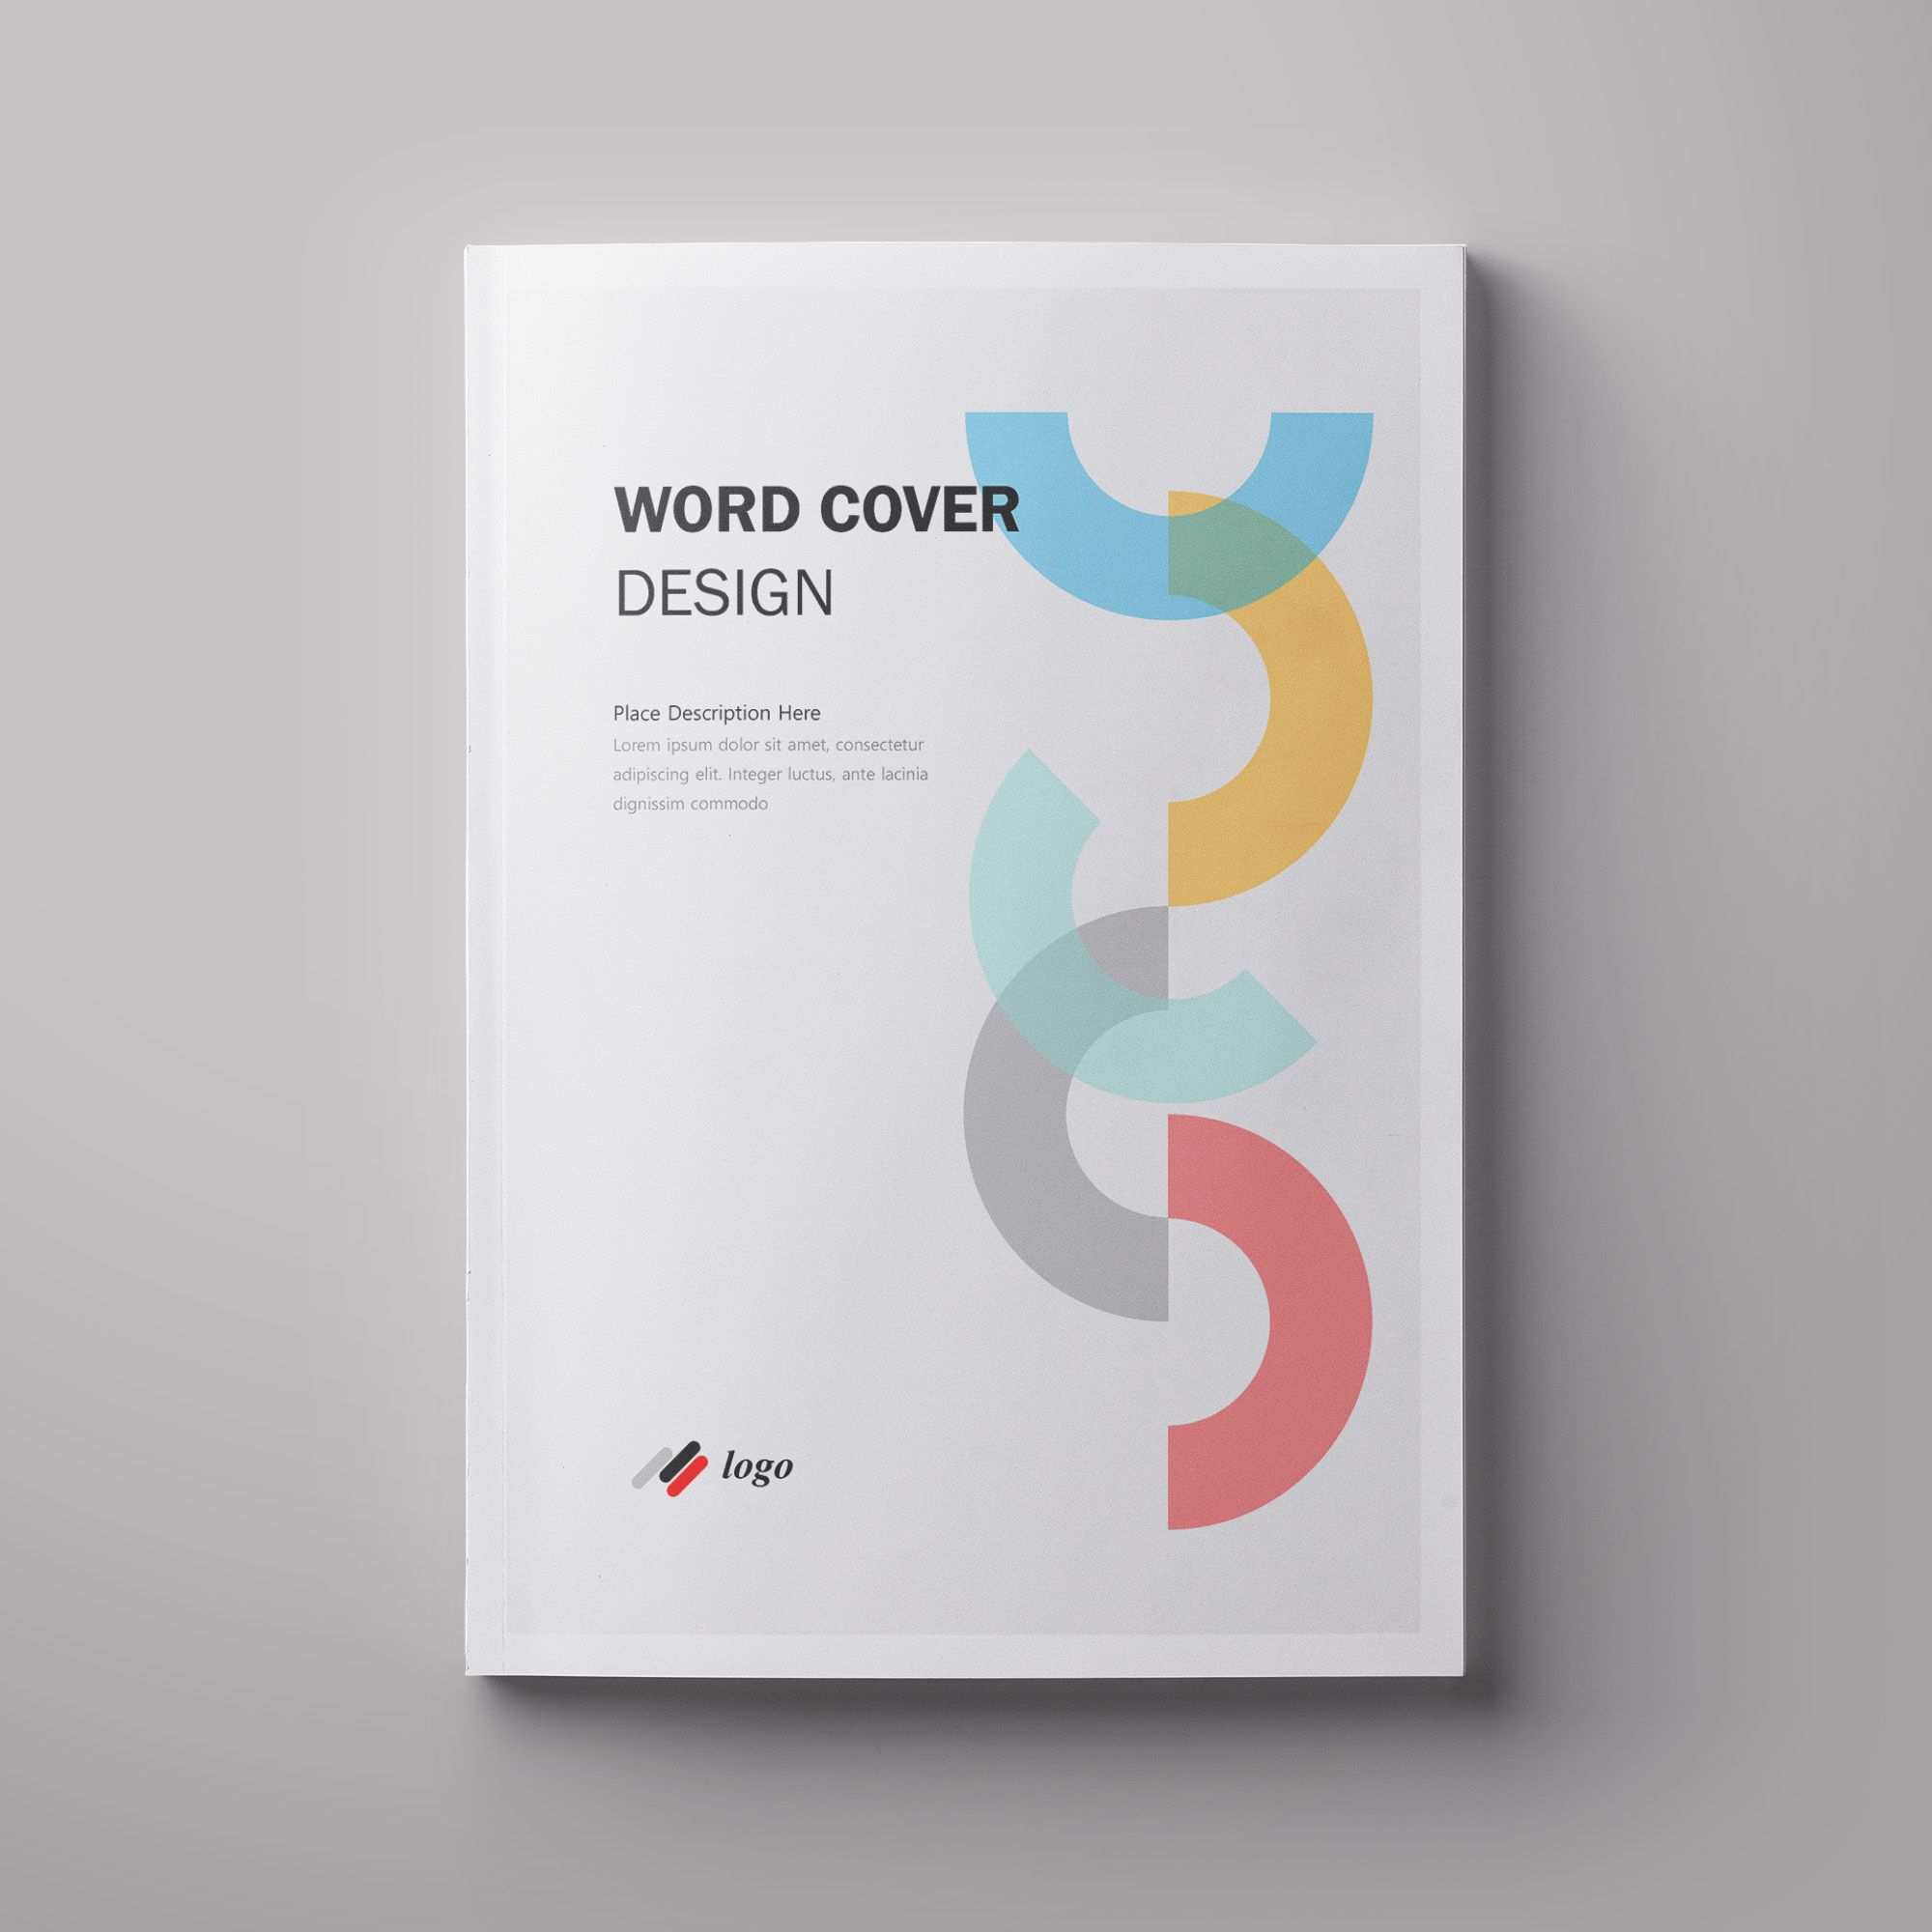 Microsoft Word Cover Templates 10 Free Download Print Design Brochure Book Design Layout Brochure Cover Design